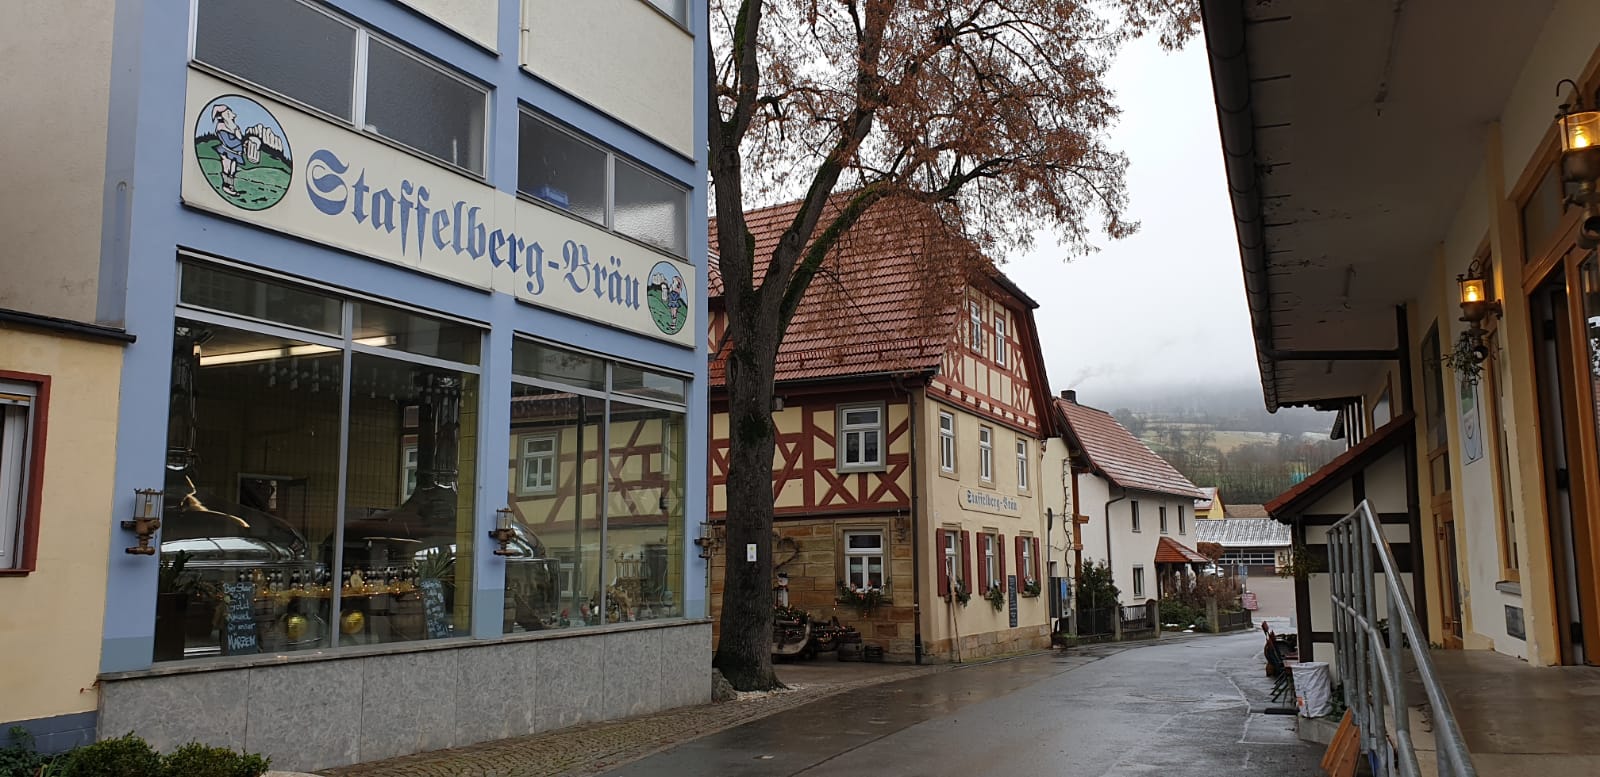 Staffelberg-Bräu: respira, bevi e mangia la Franconia